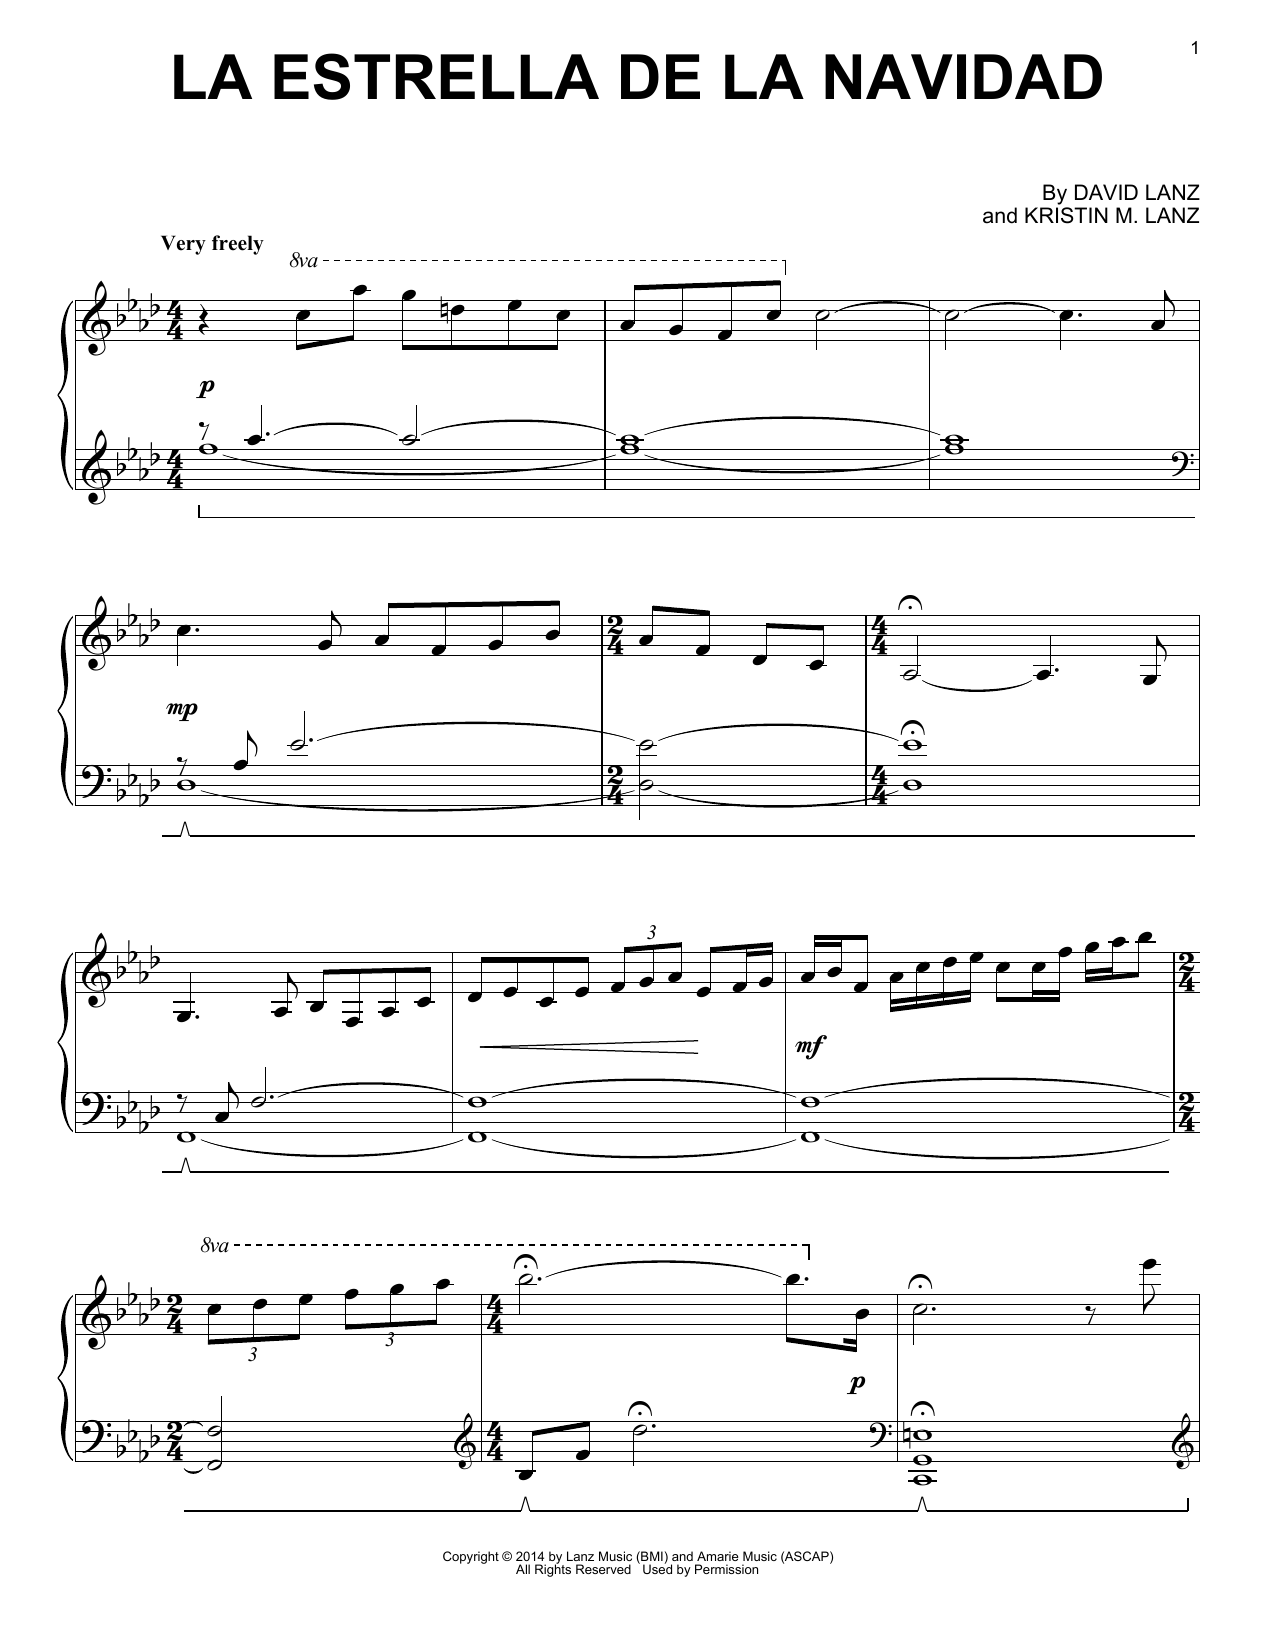 David Lanz & Kristin Amarie La Estrella De La Navidad Sheet Music Notes & Chords for Piano Solo - Download or Print PDF